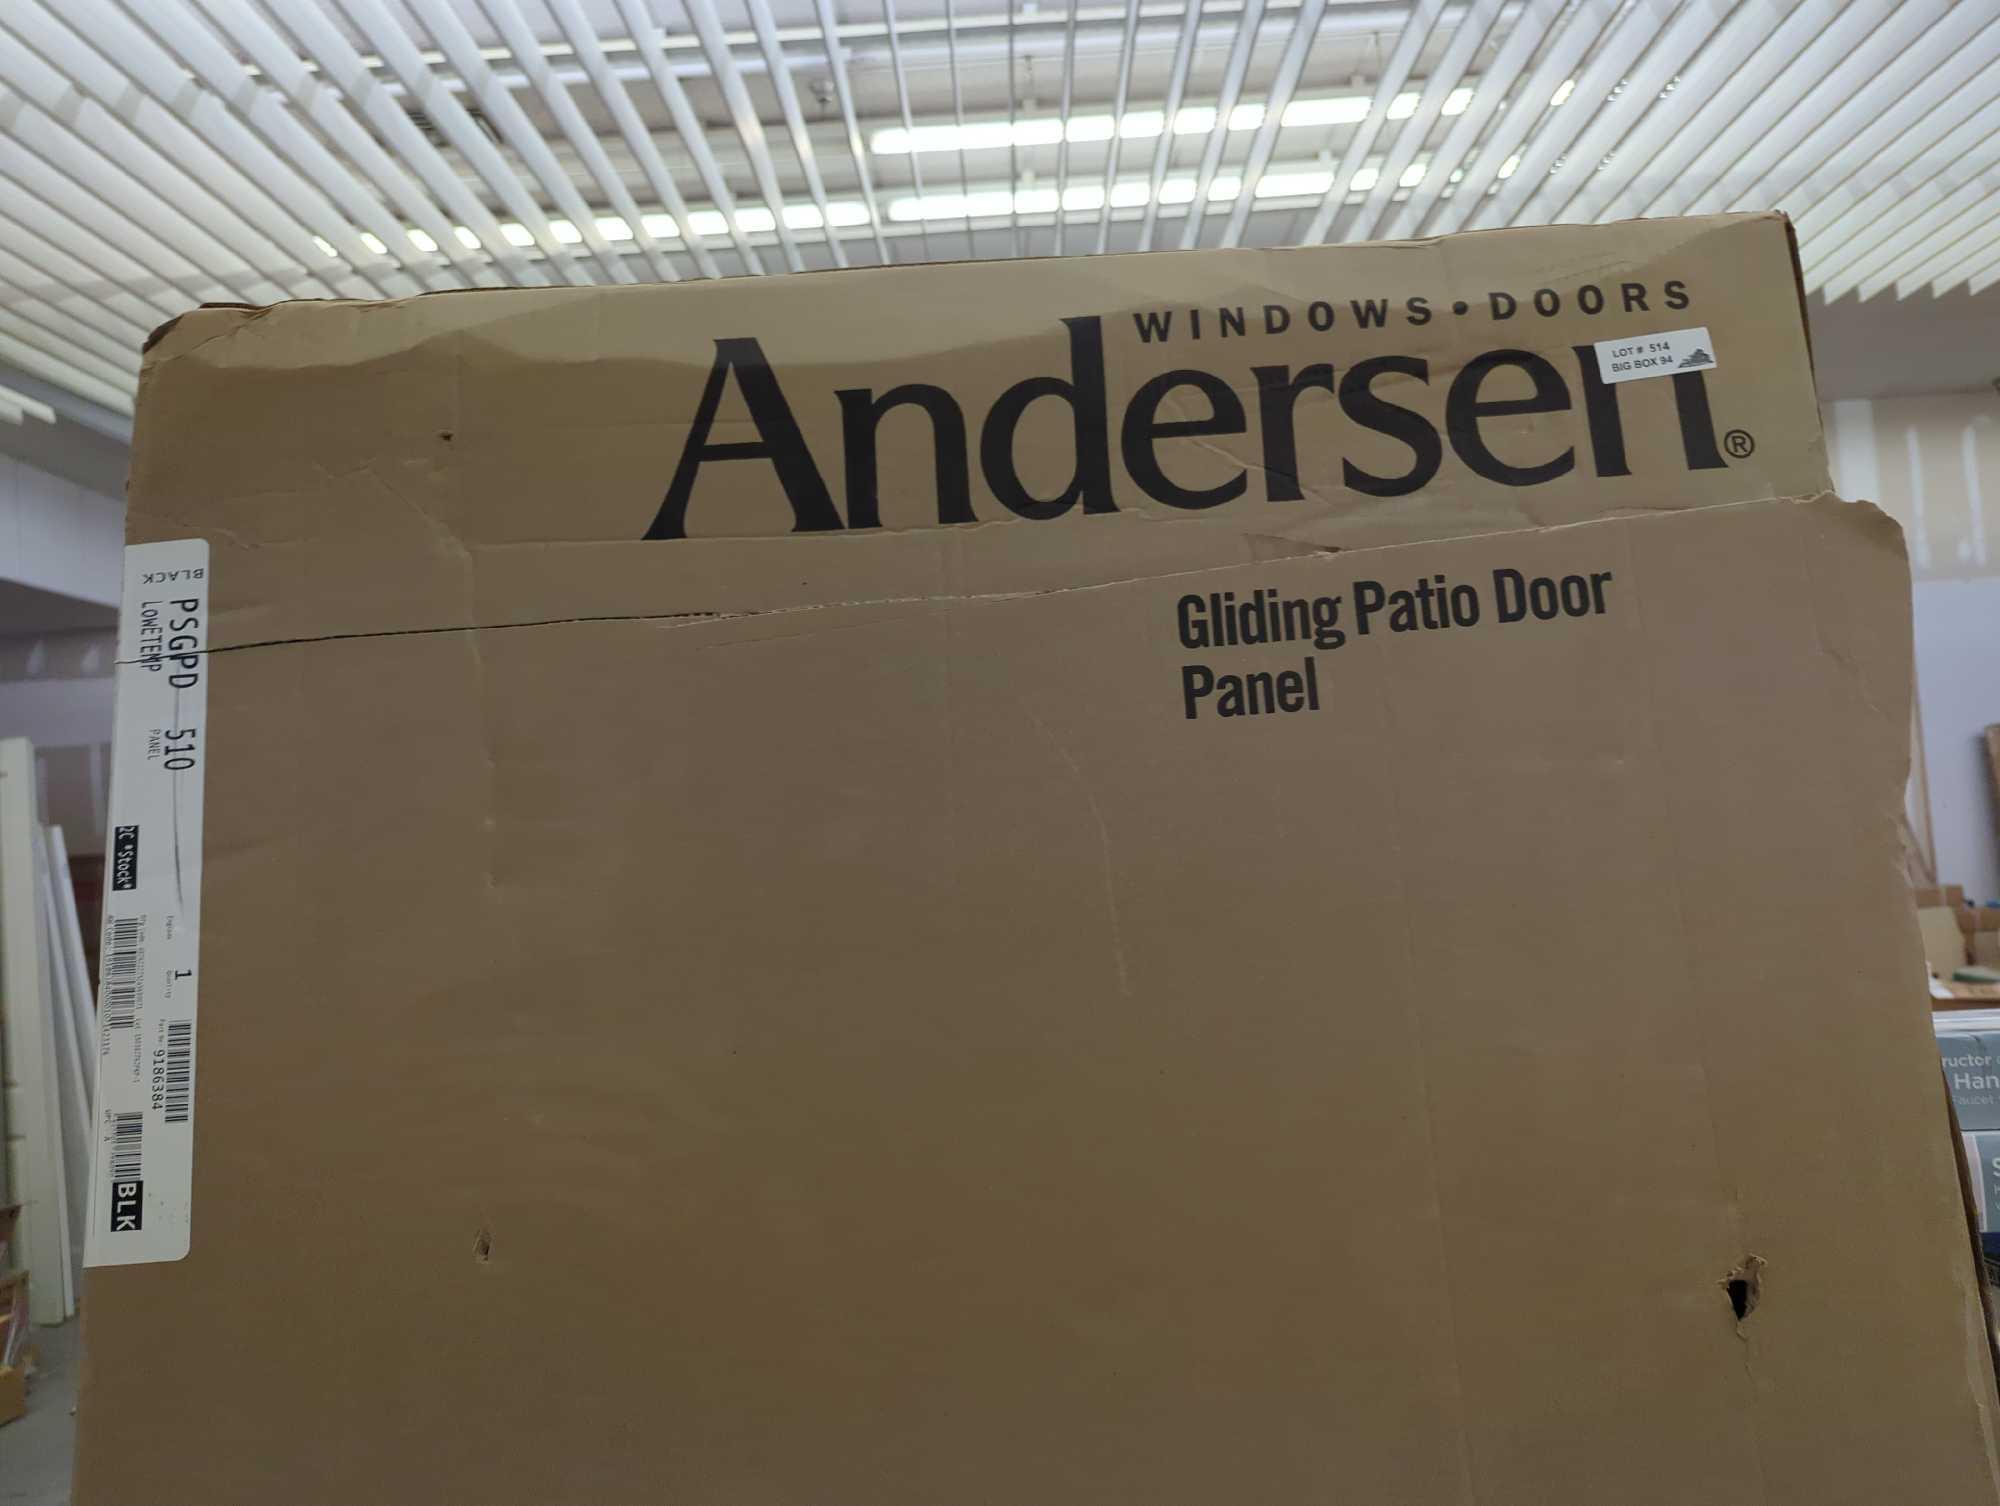 Andersen 200 Series Perma Shield Gliding Patio Door Panel PS5 - Left Hand Operating In Black Model